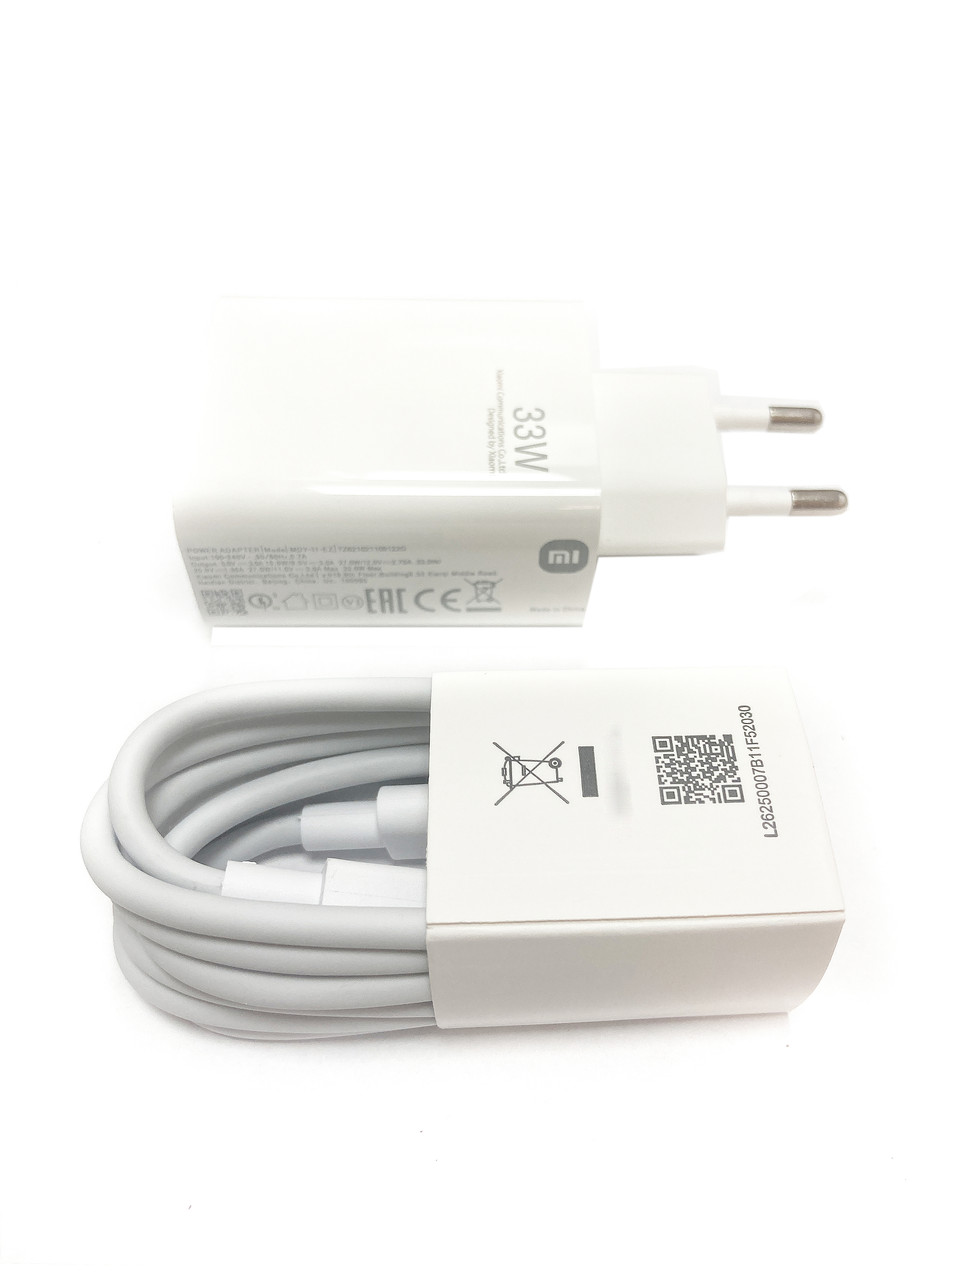 Зарядное устройство (USB-адаптер) для смартфона USB-C Xiaomi Mi, 33W + кабель USB&USB-C (Original)